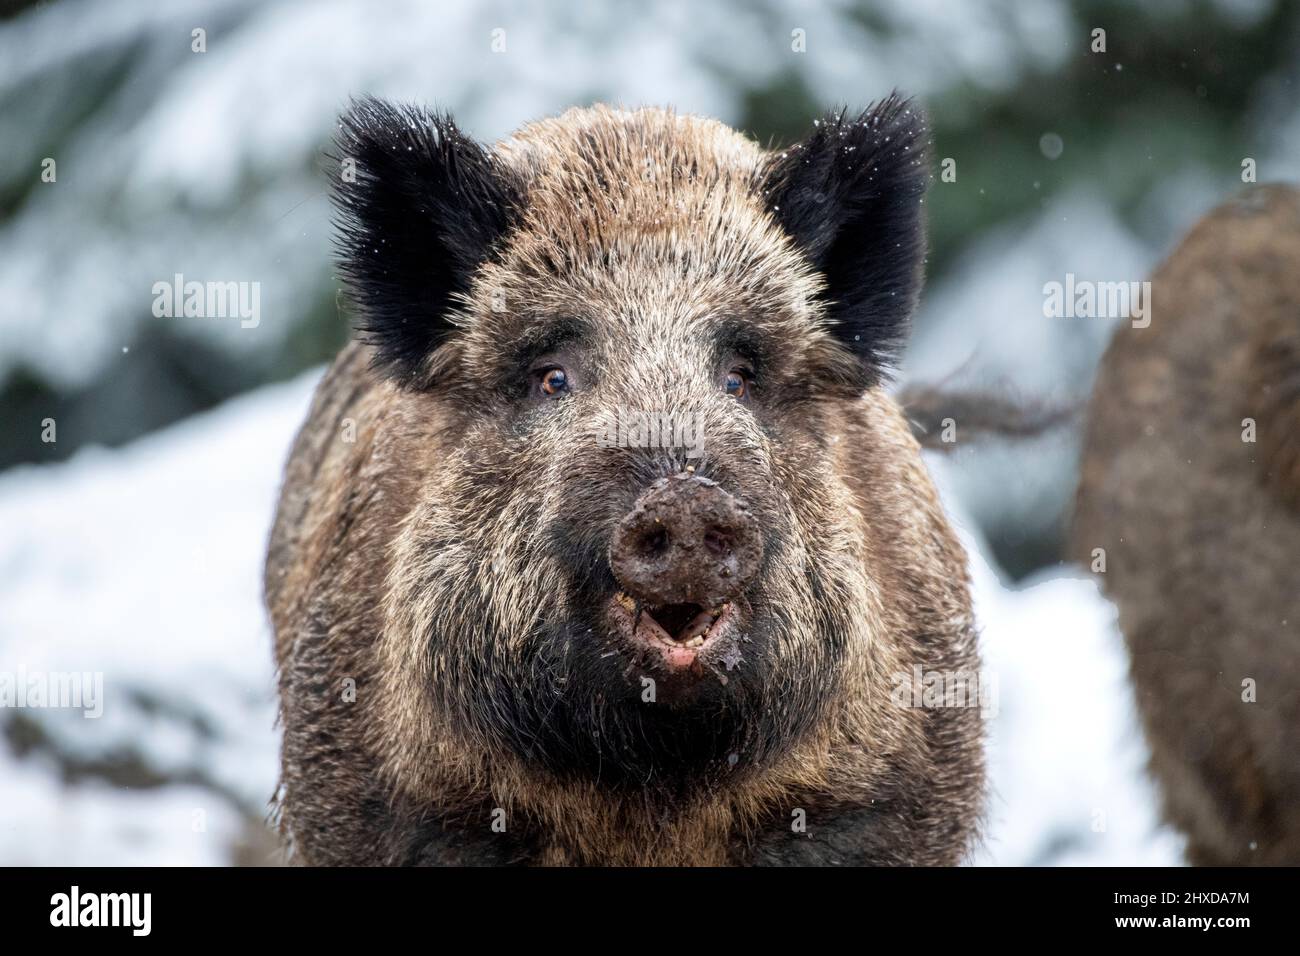 Wild boar in snow Stock Photo